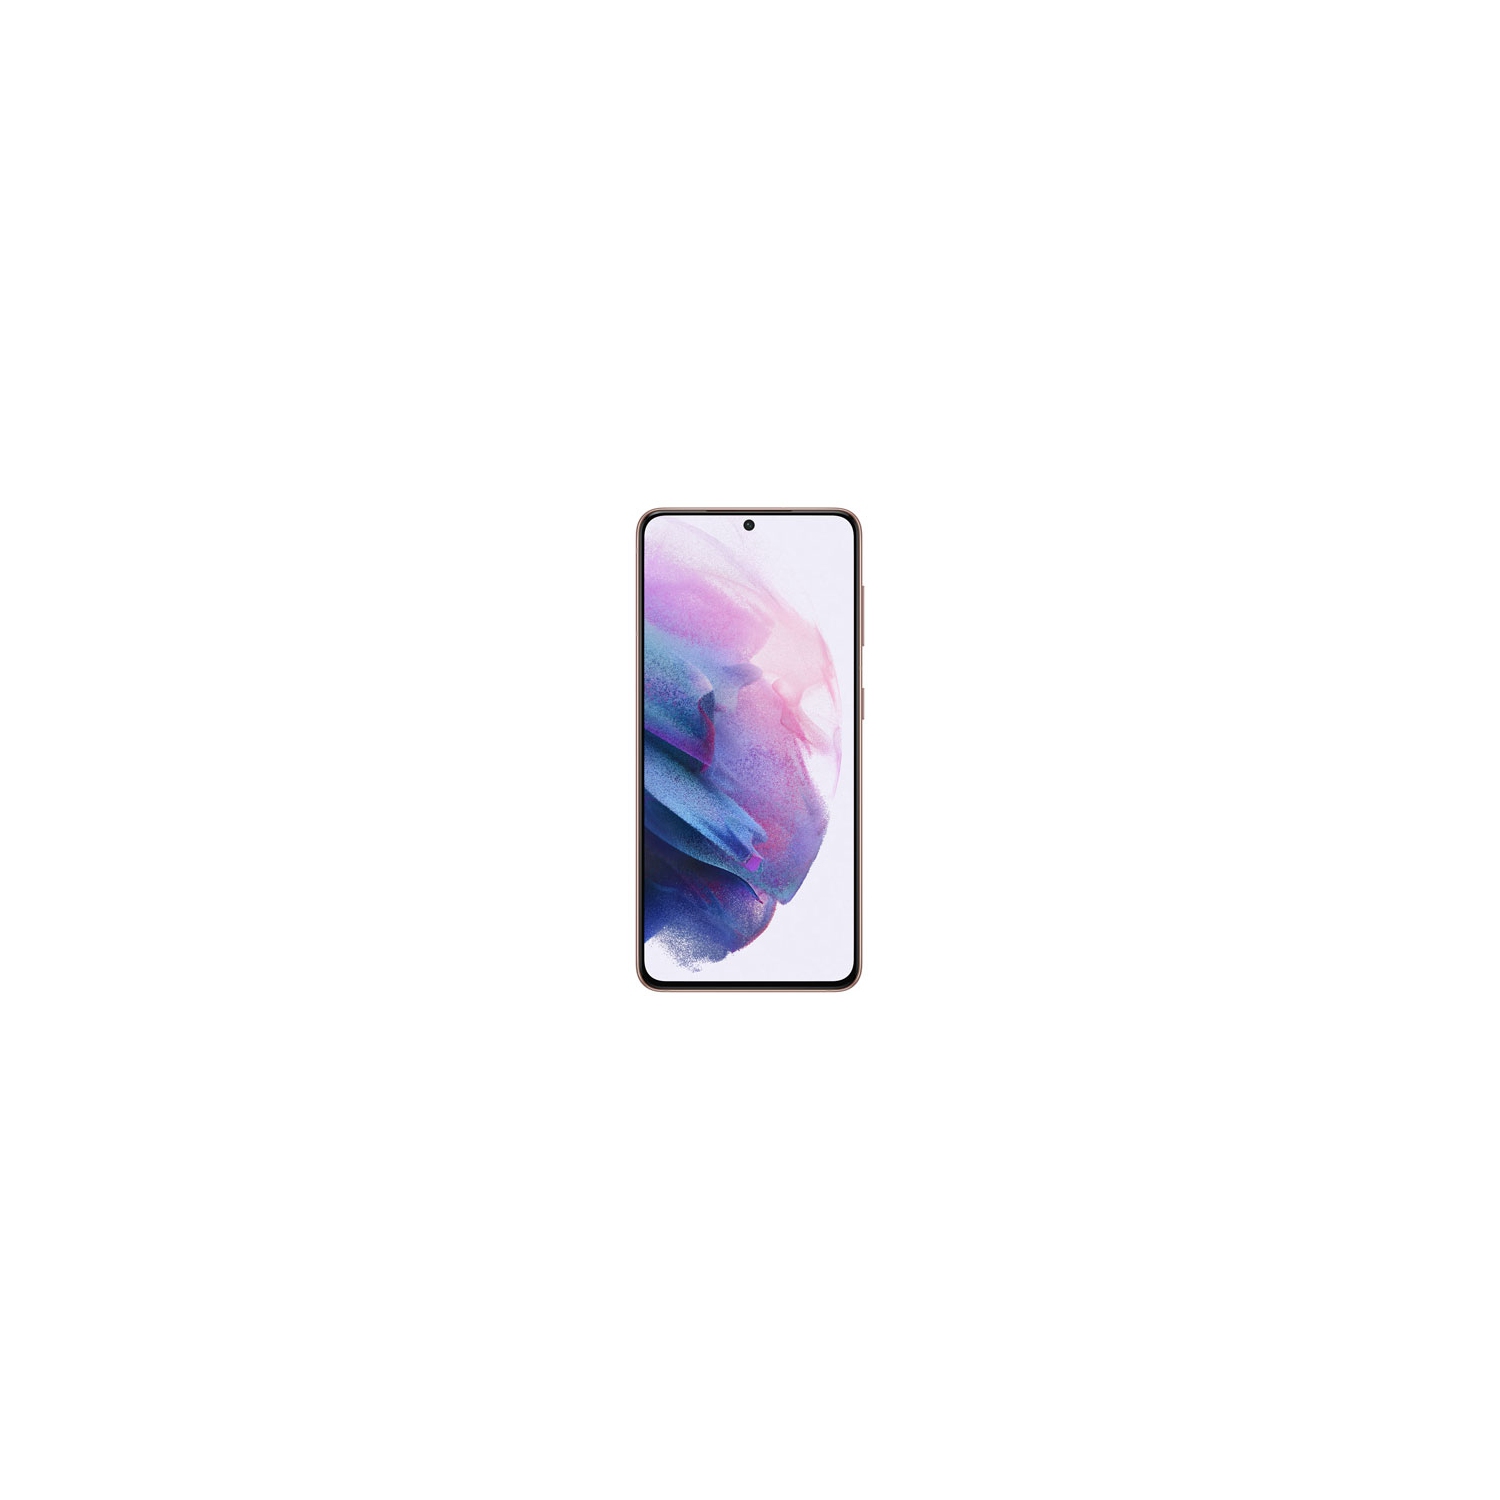 Samsung Galaxy S21 128GB Smartphone - Phantom Violet - Unlocked - Open Box